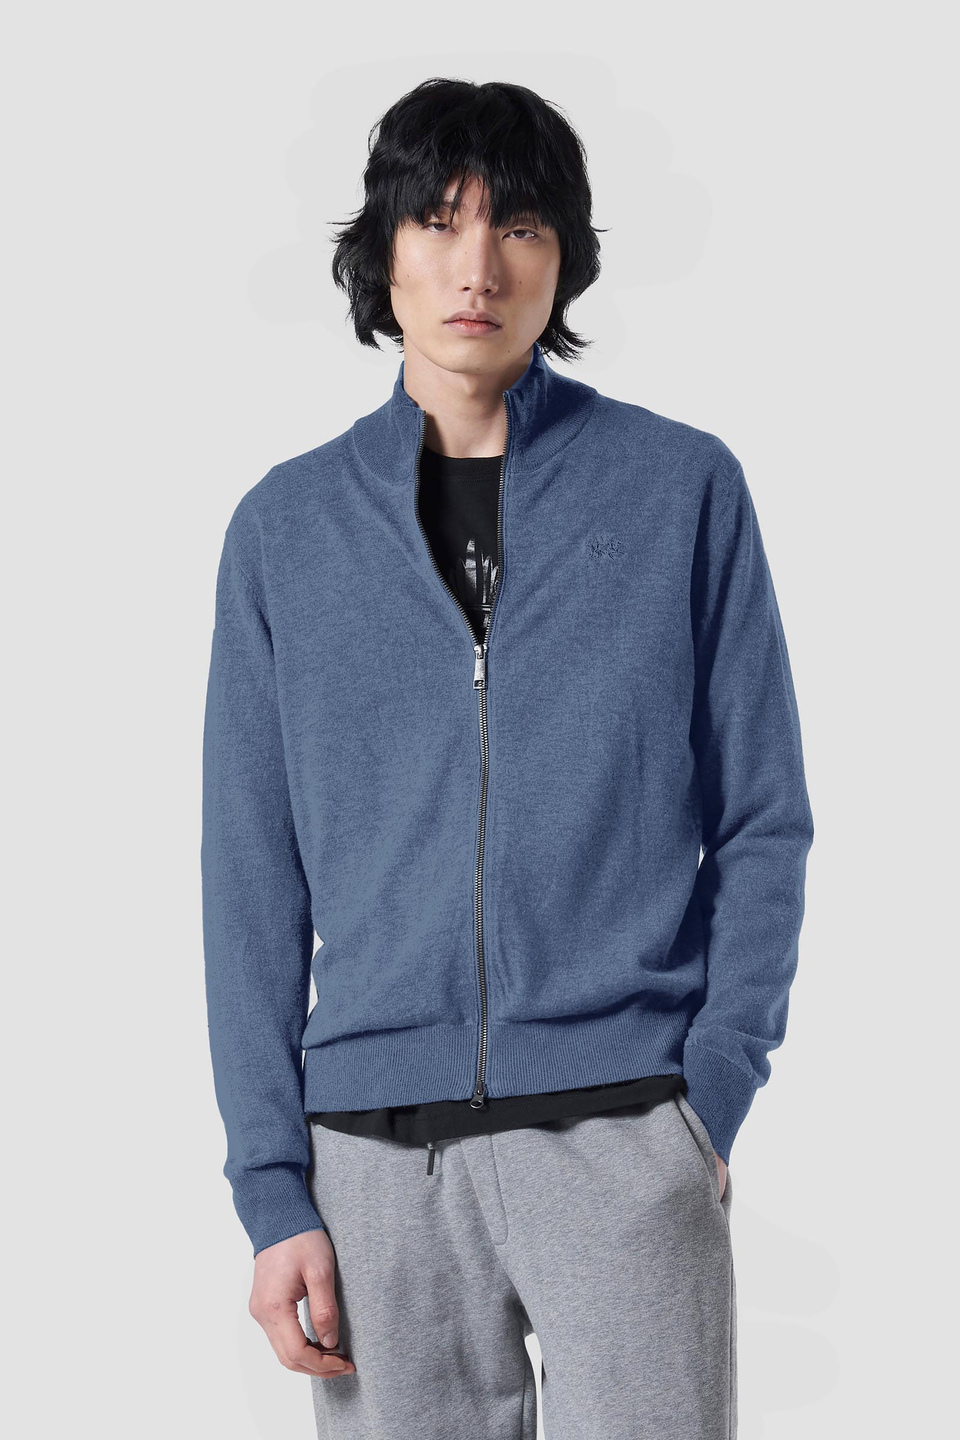 Men's wool-blend sweatshirt | La Martina - Official Online Shop